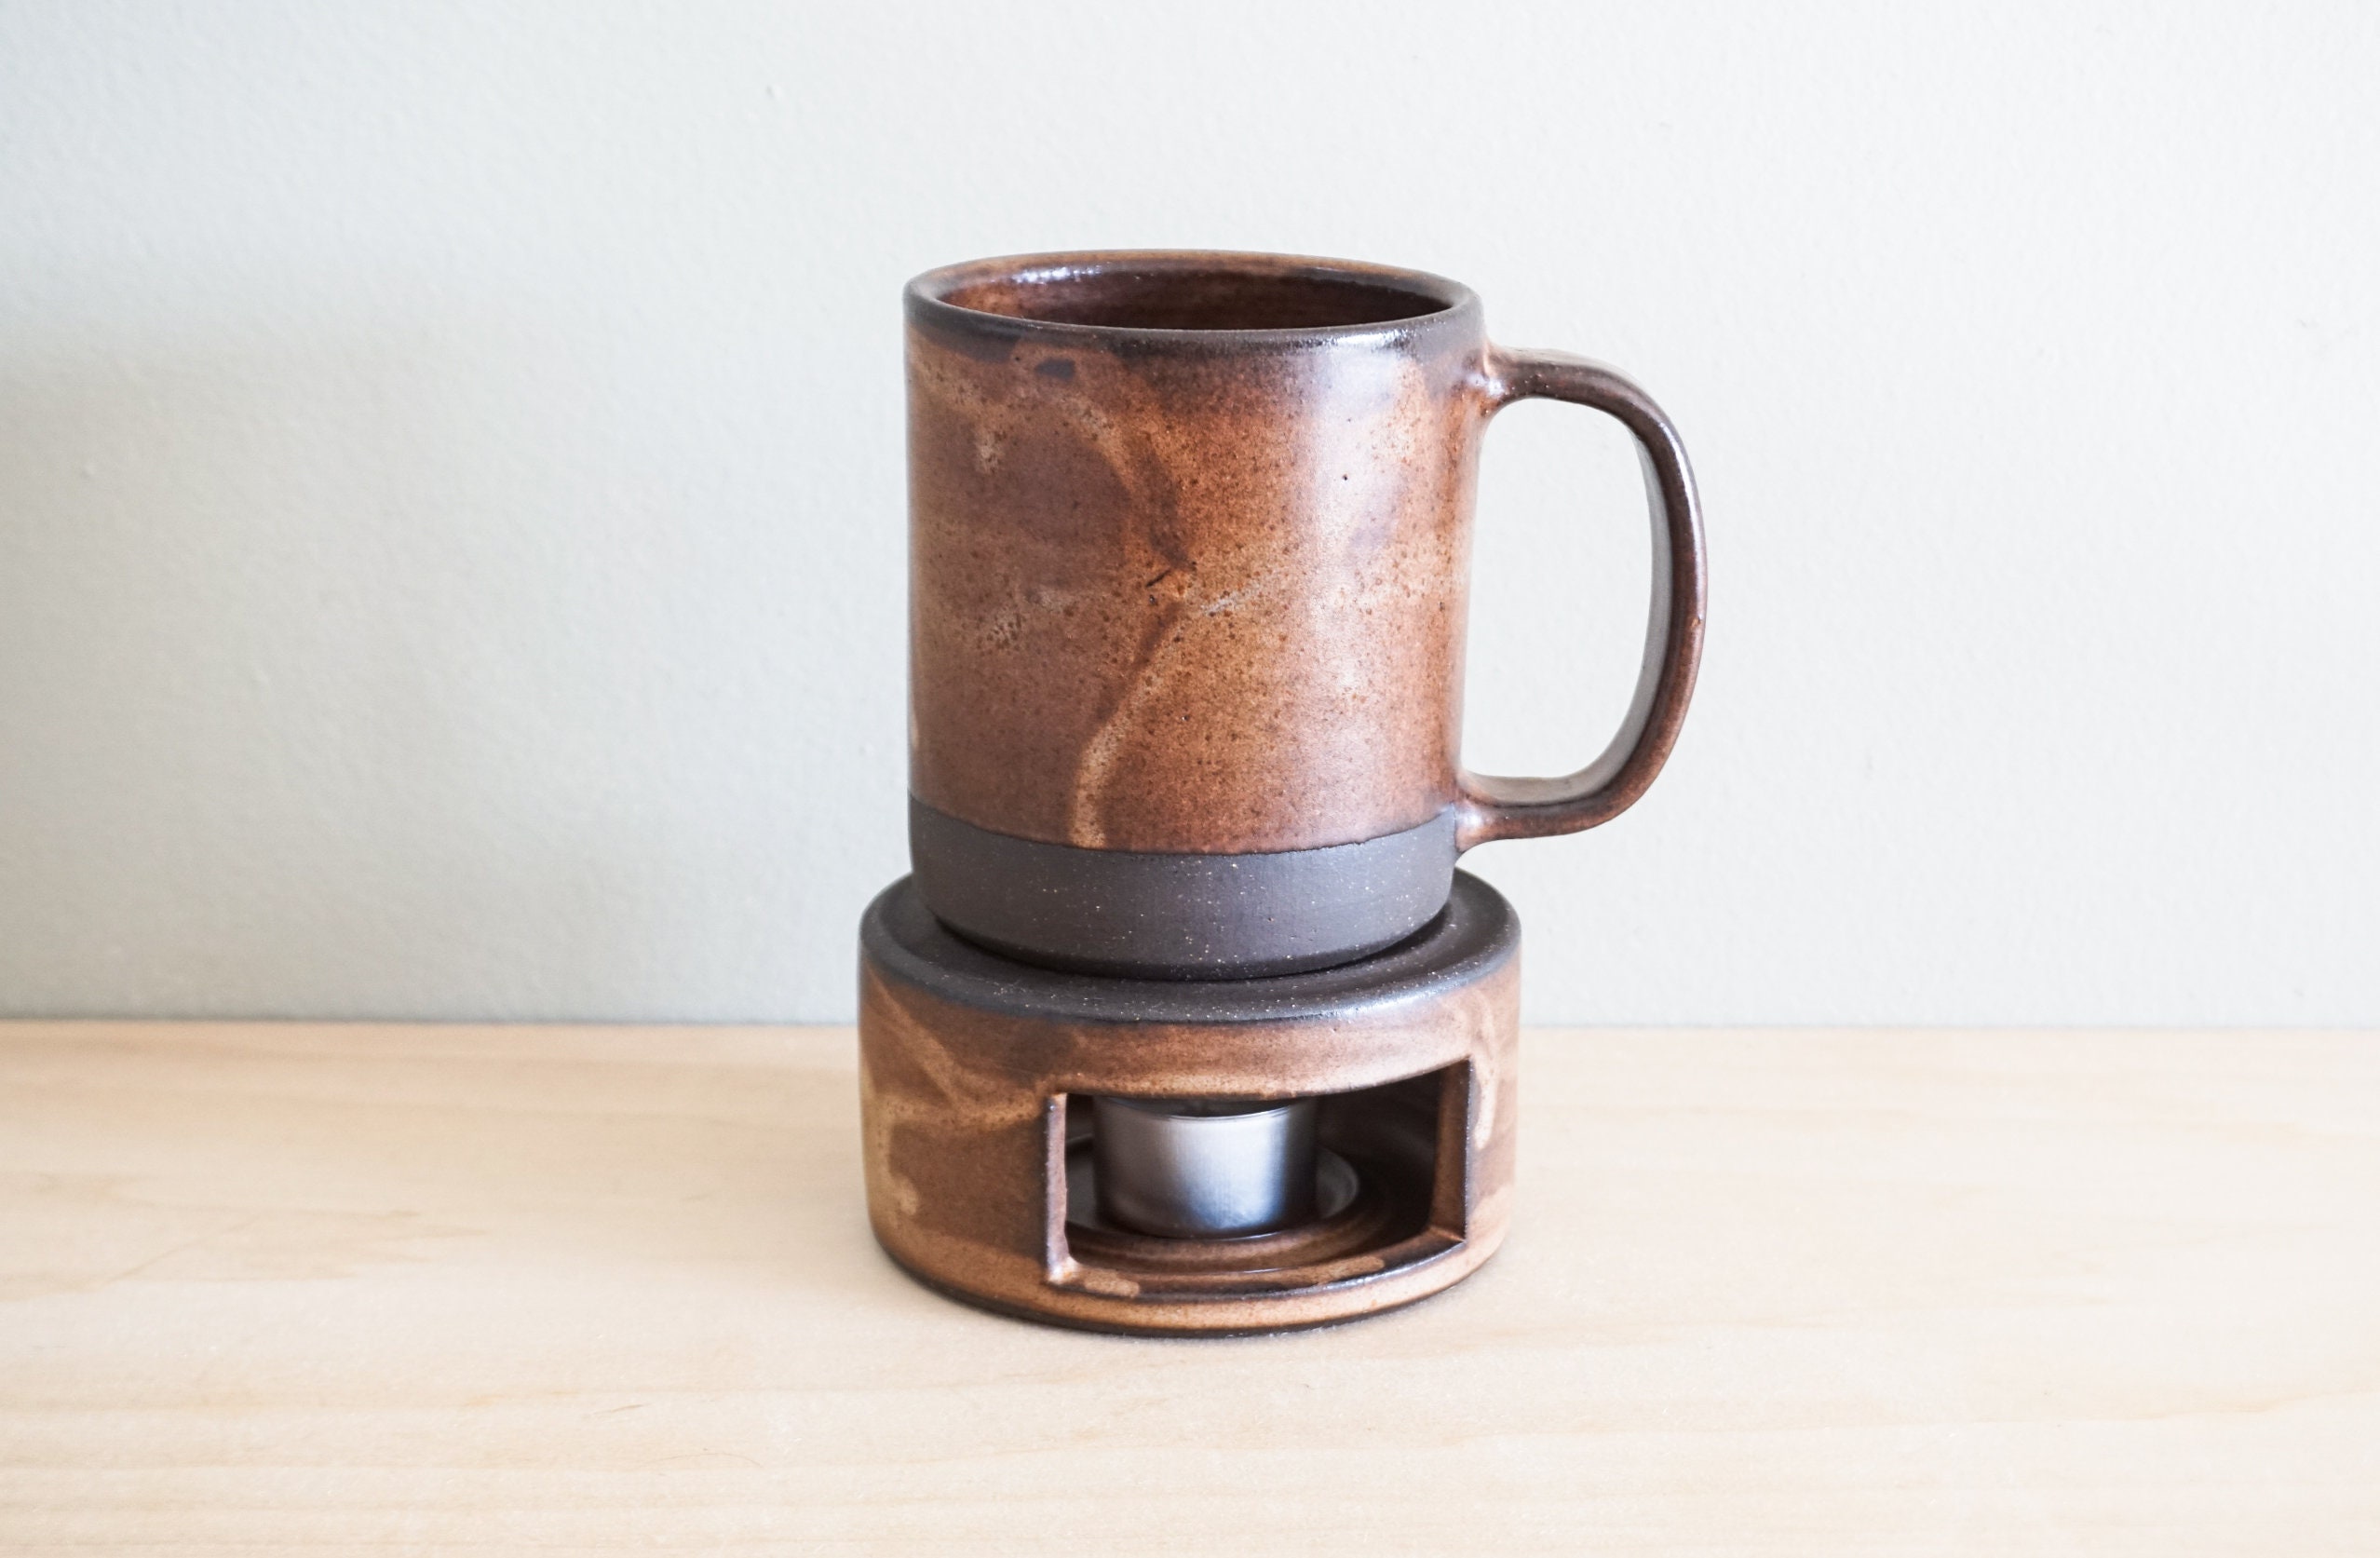 Tea Light Mug Warmer in Black Moss, Cinnamon or Fog Gray. Keep